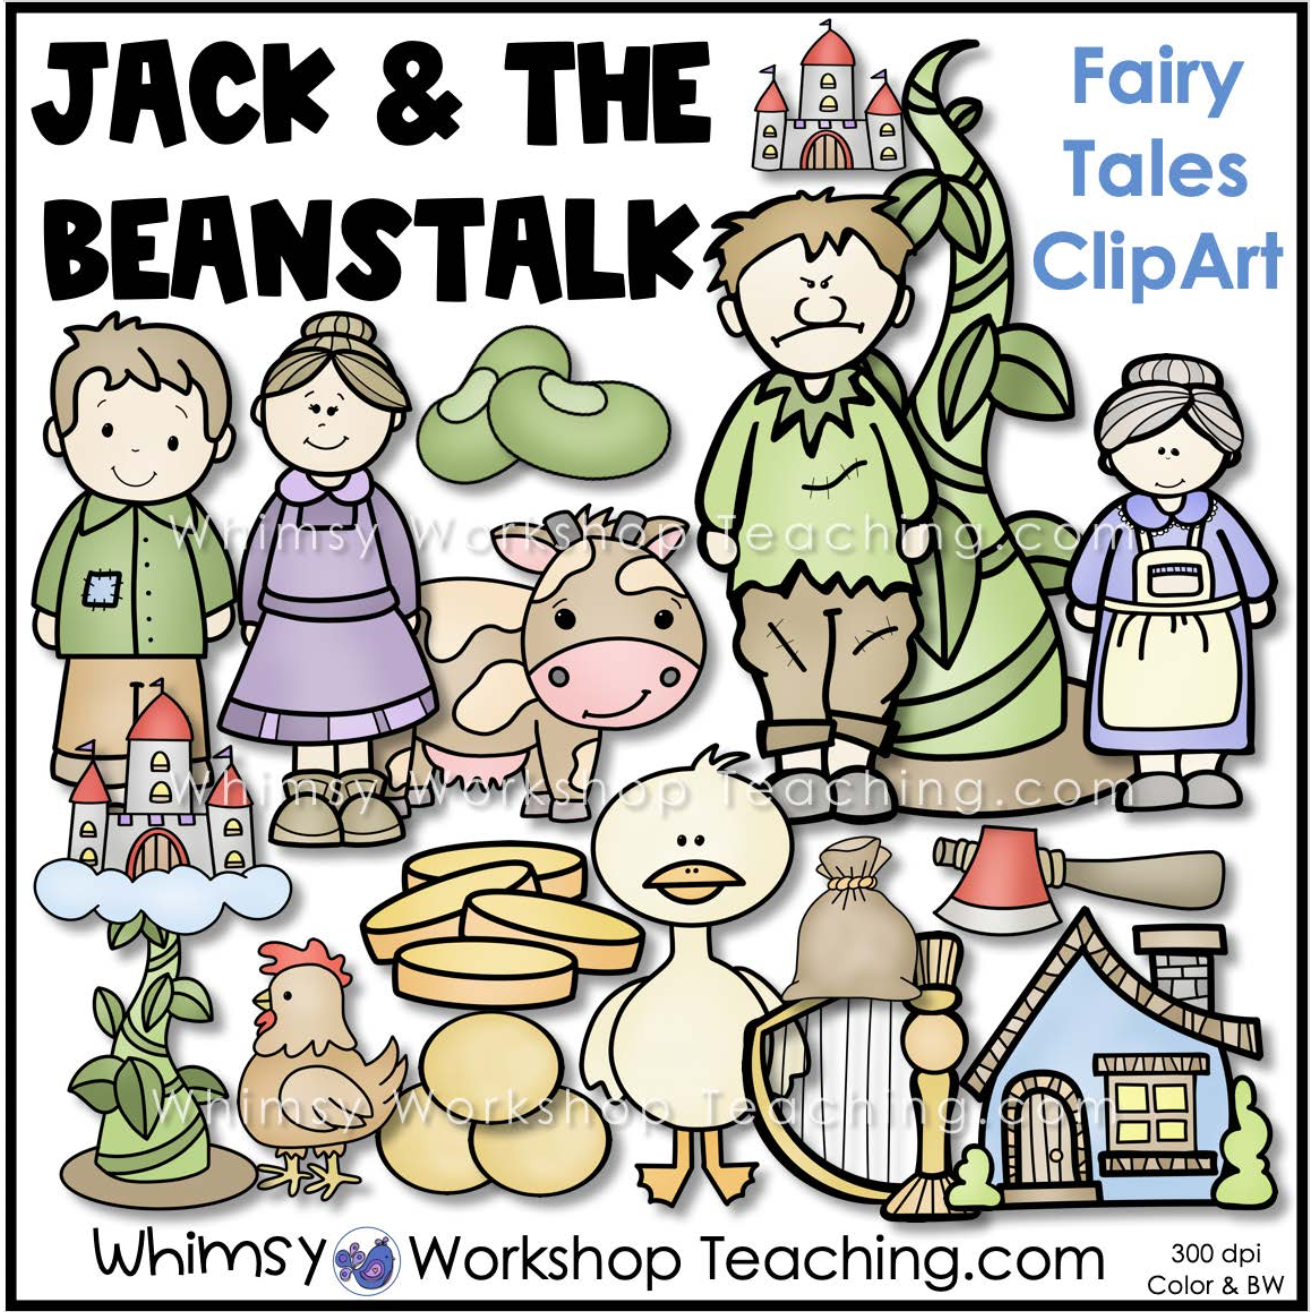 Jack & The Beanstalk Fairy Tale Clip Art Images Color Black White - Whimsy  Workshop Teaching